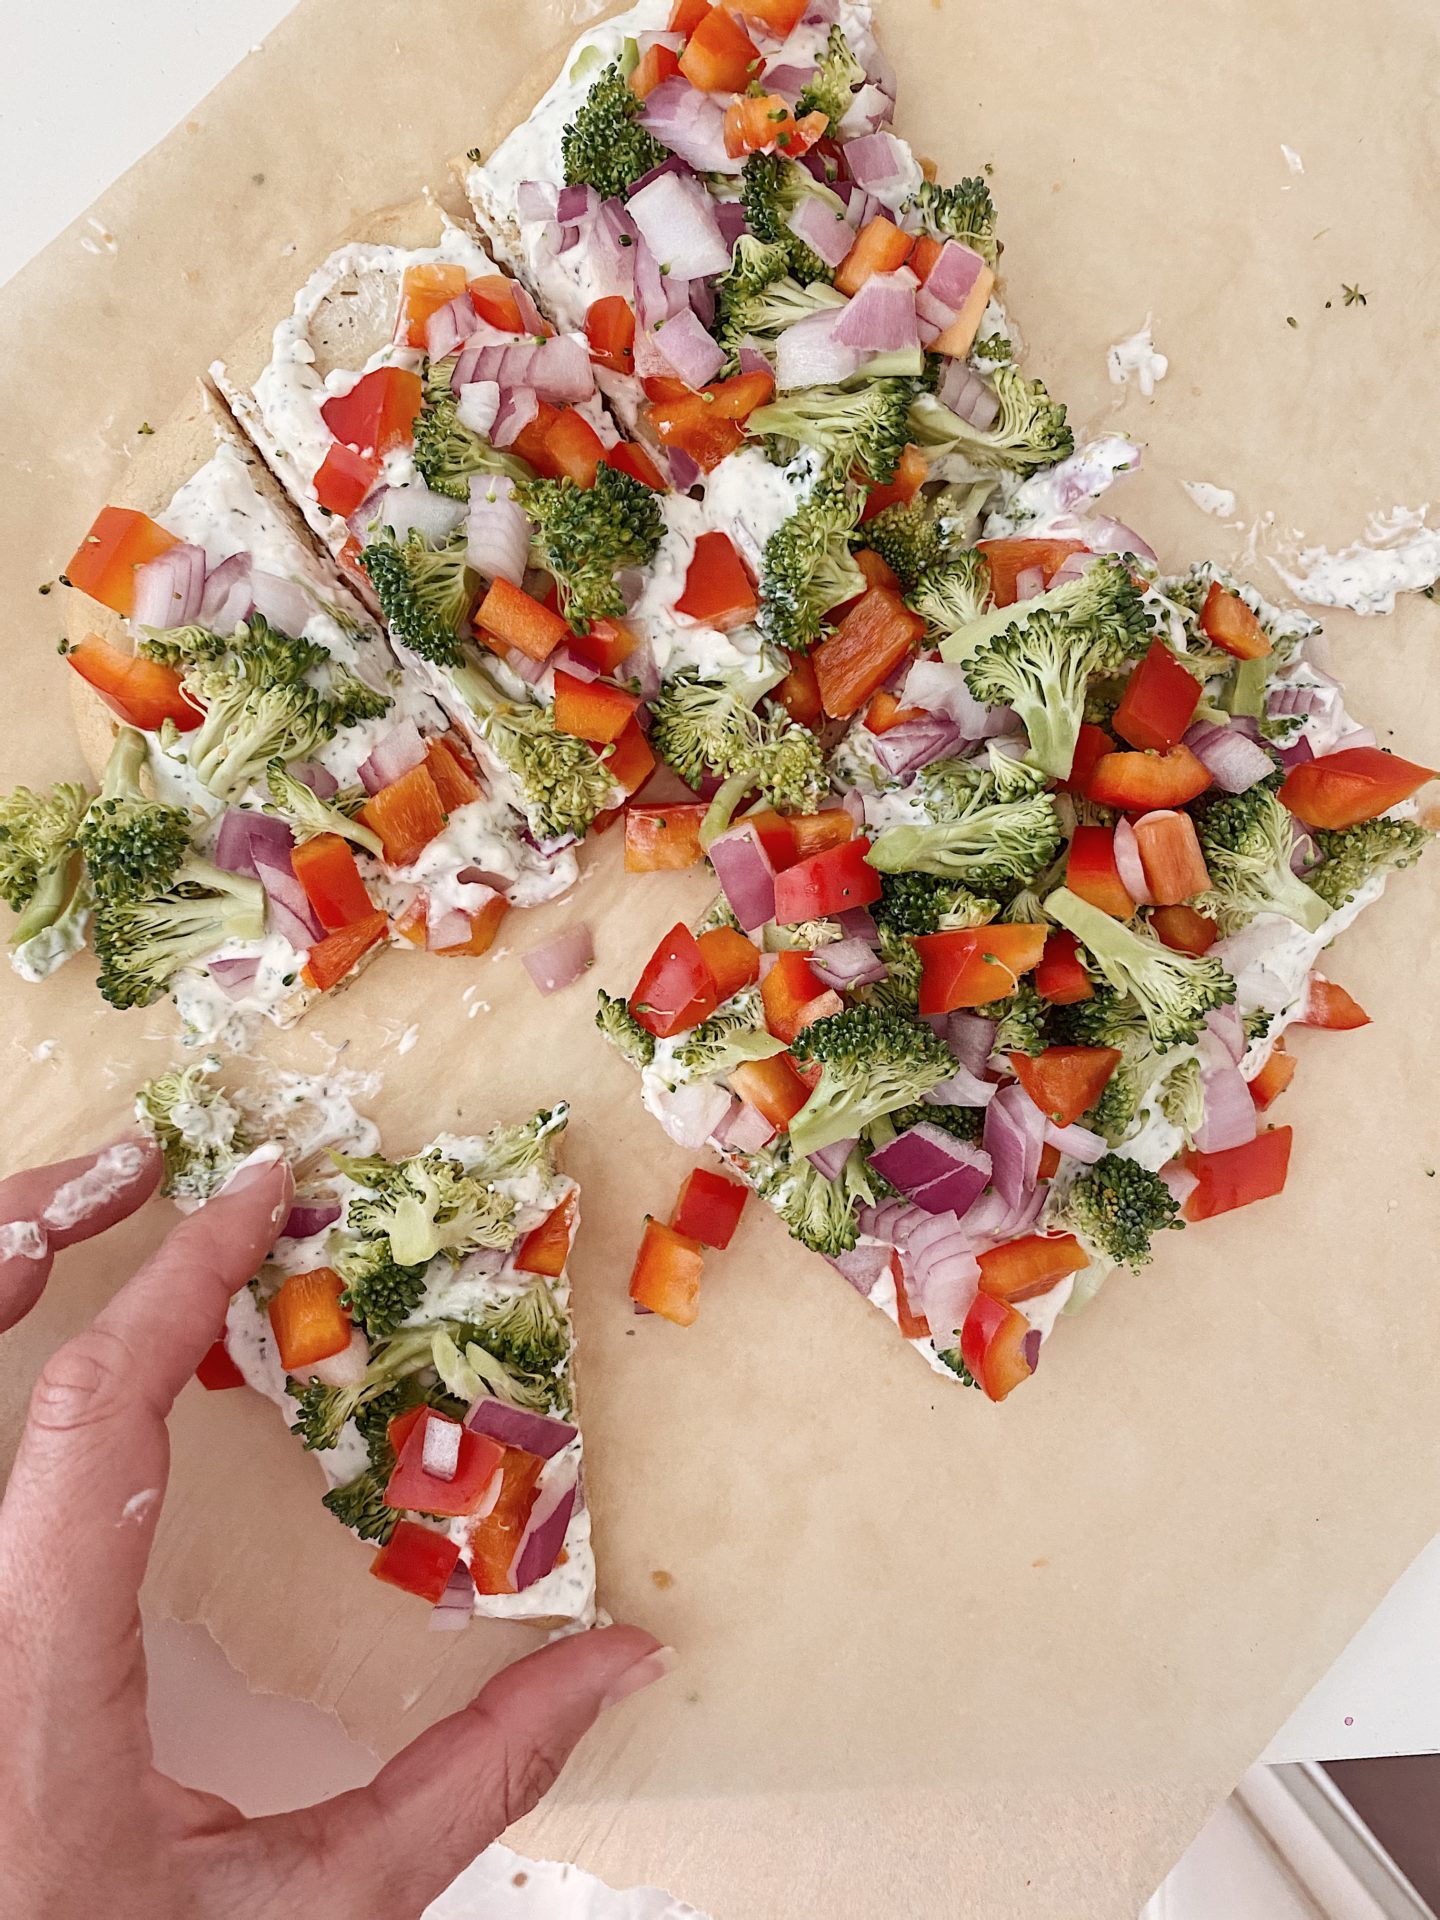 Paleo veggie pizza